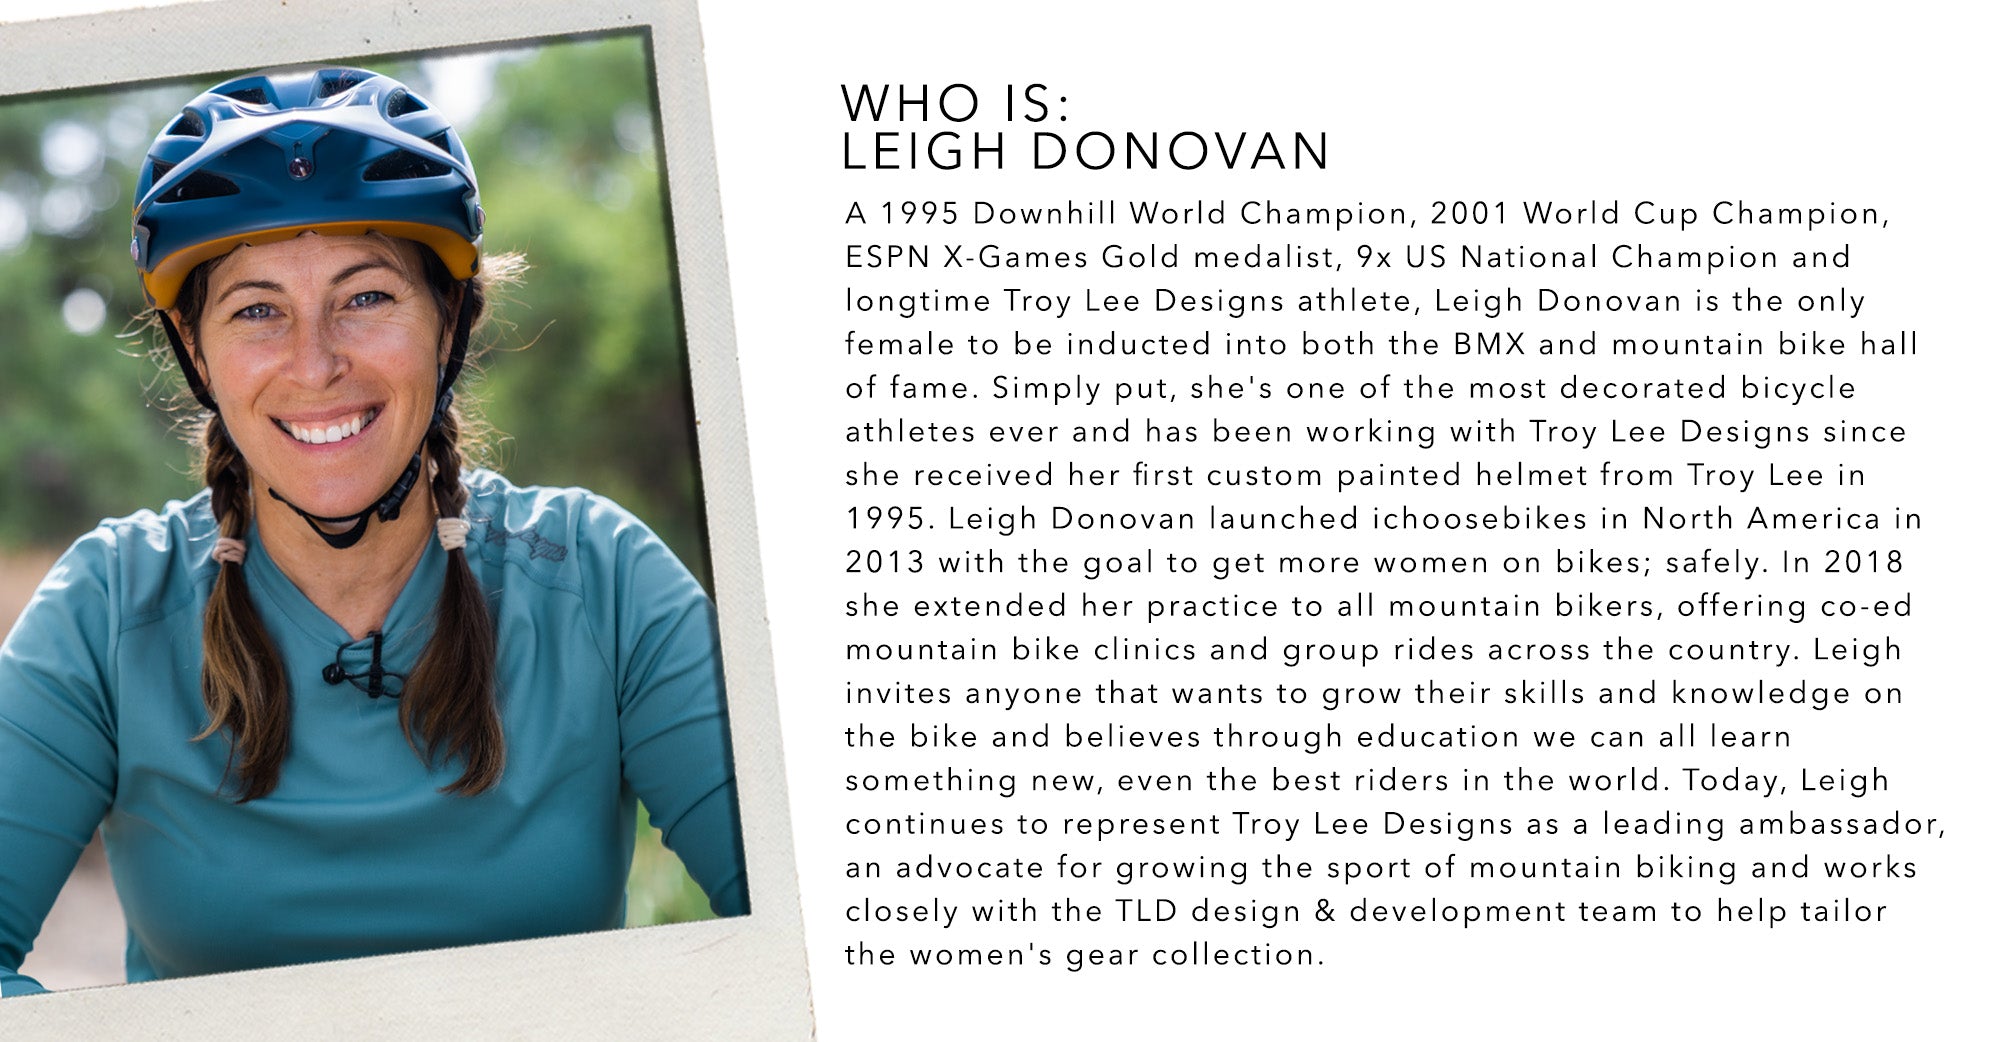 Who is Leigh Donovan?